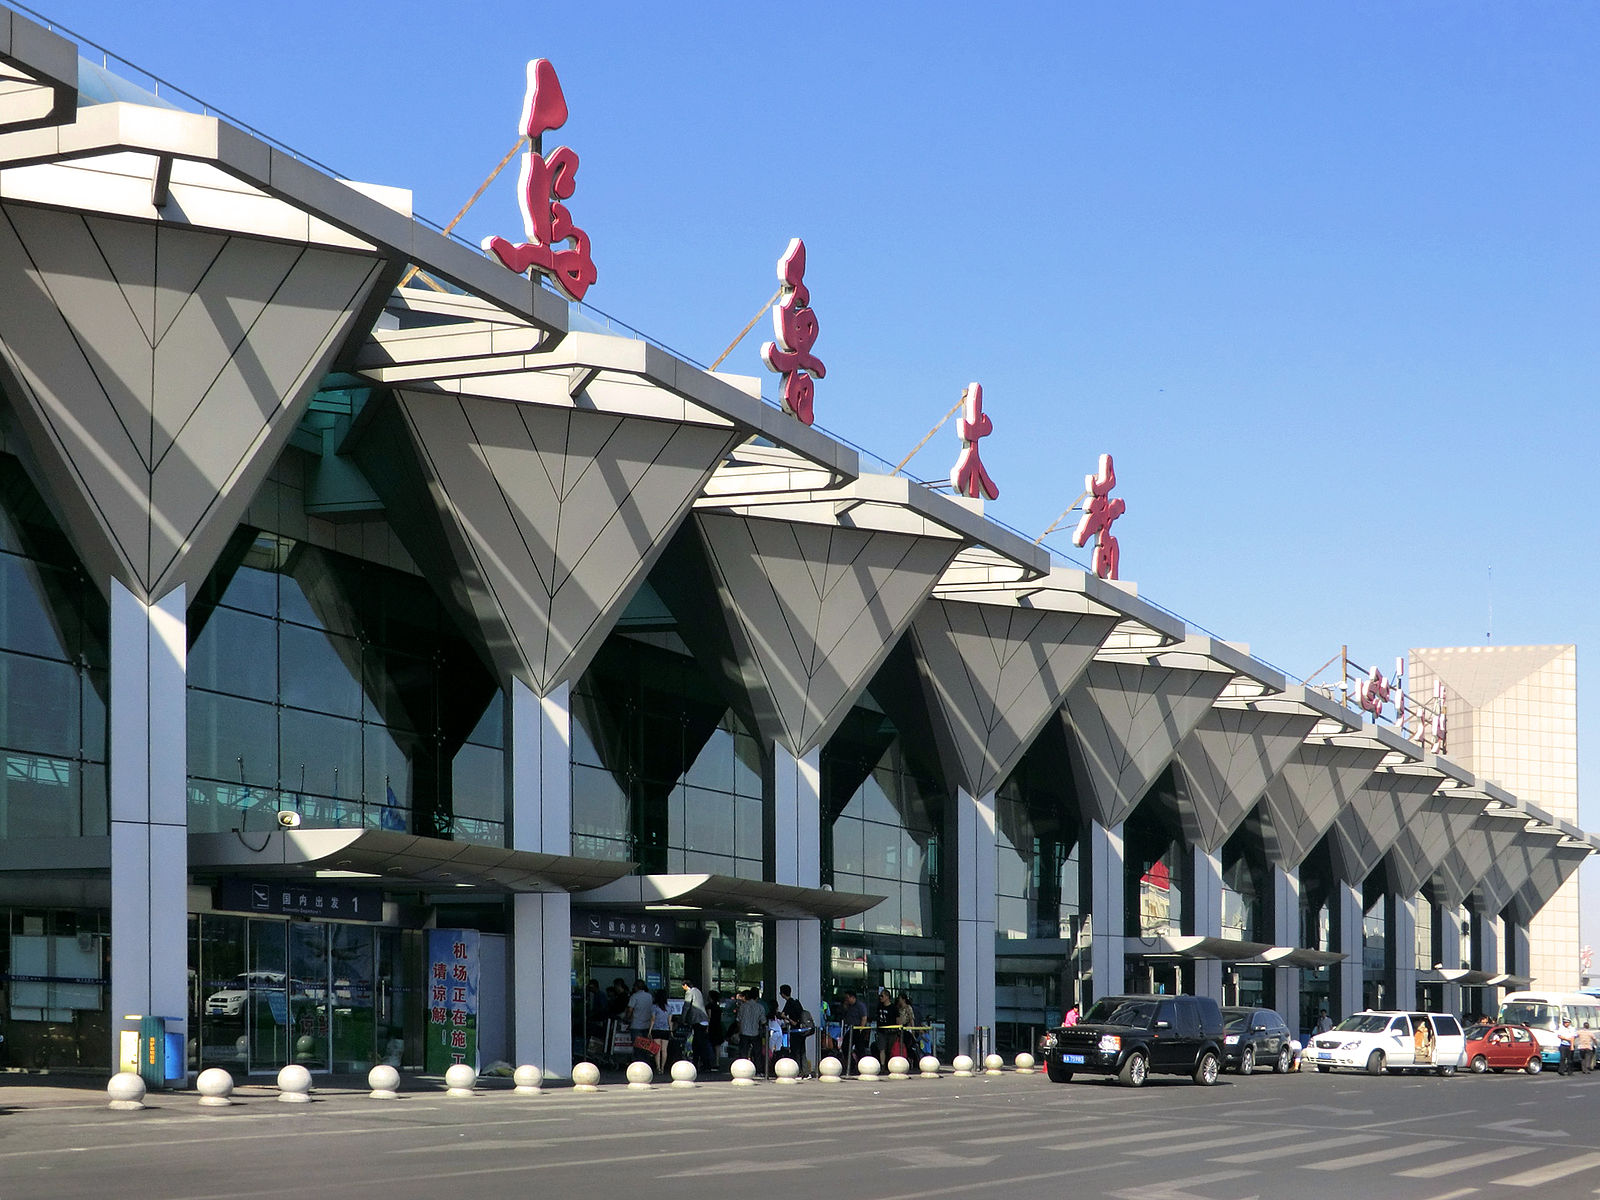 Urumqi Diwopu International Airport is the main airport serving the city of Urumqi in China.